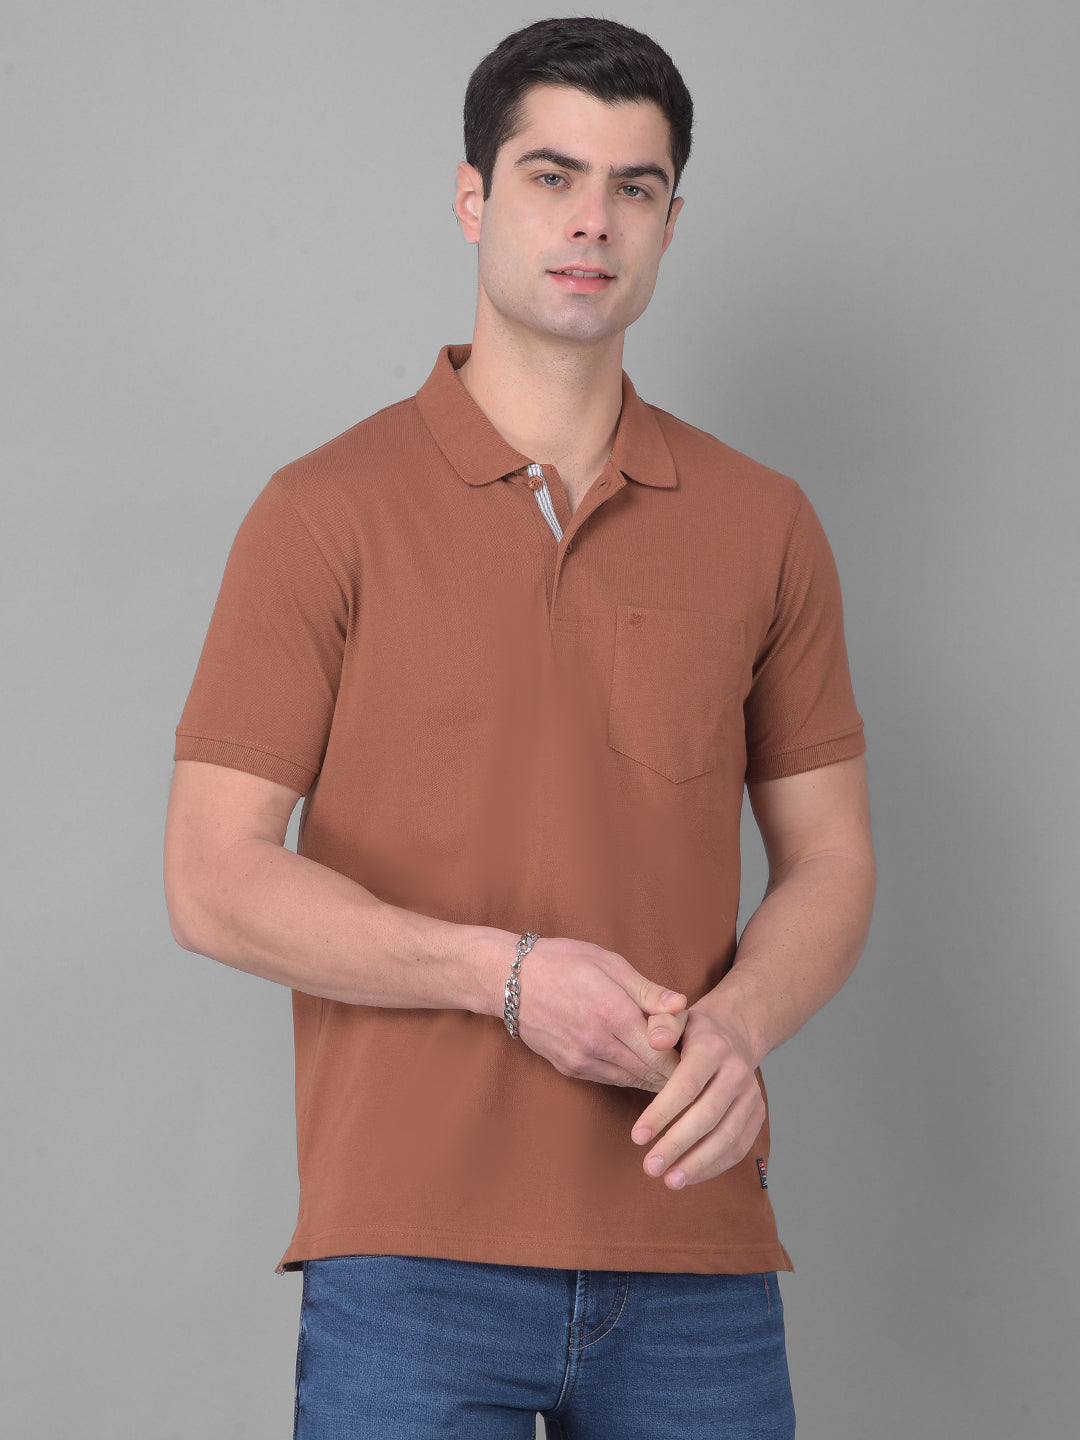 INKAST Denim Shirt Review ll Slim fit size M Denim Shirt in Damage Rough  Inkast Denim on Amazon - YouTube